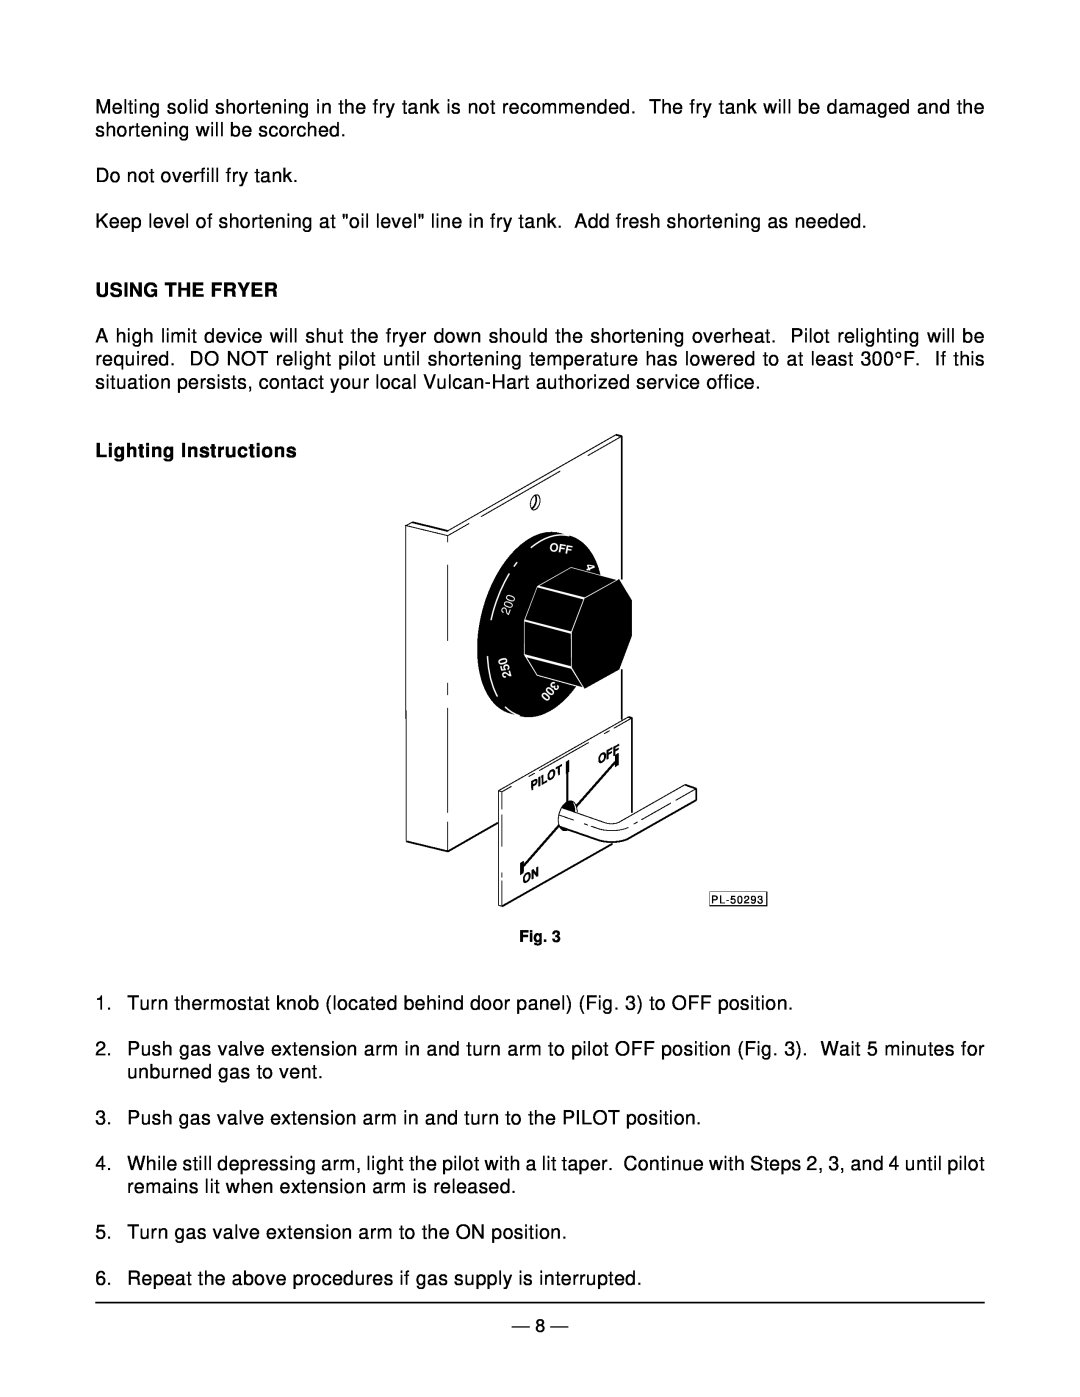 Vulcan-Hart TK65 operation manual Using The Fryer, Lighting Instructions 